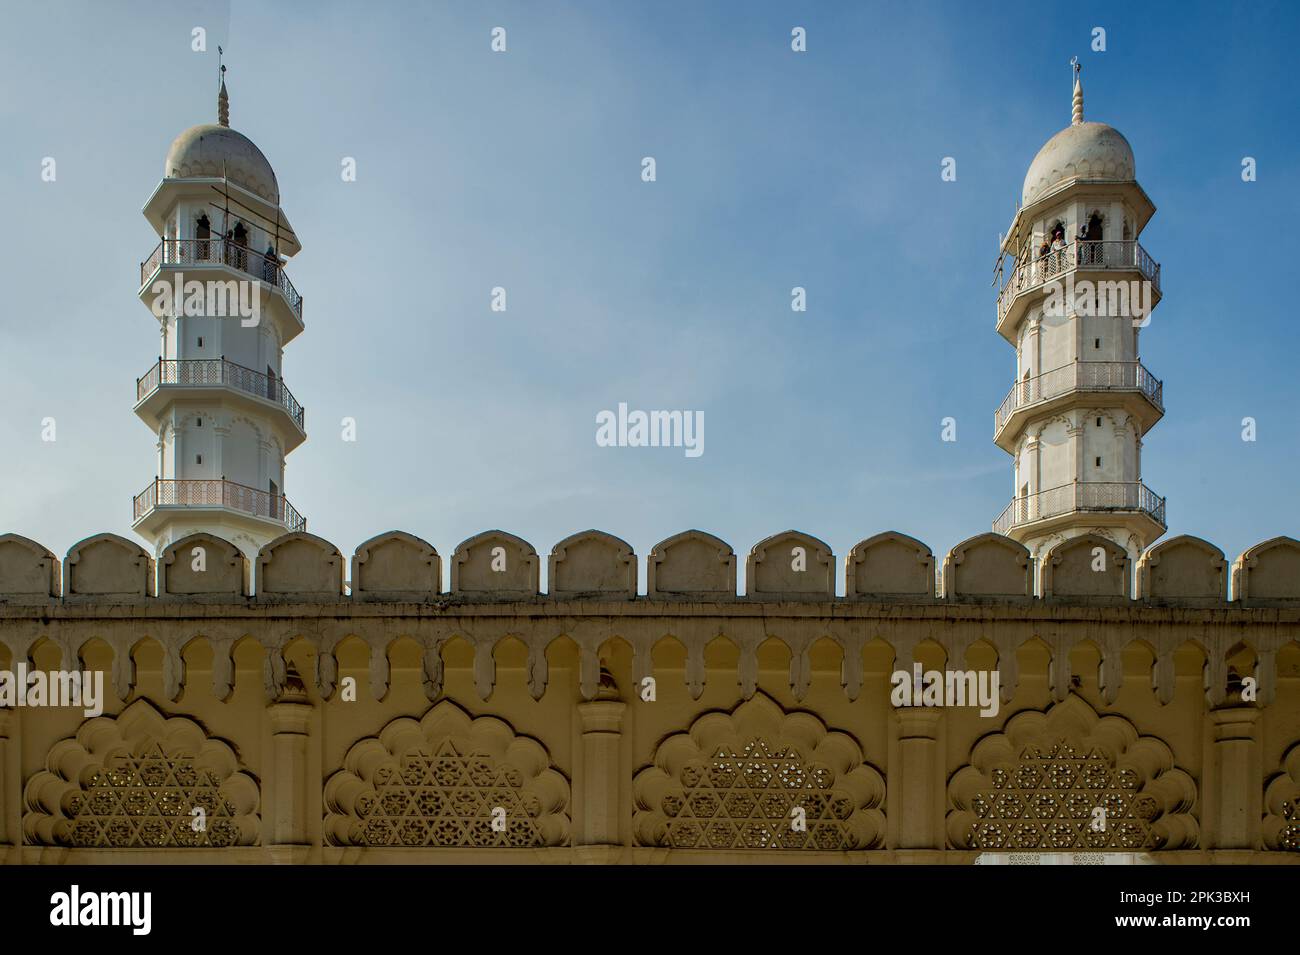 12 27 2014 heritage architecture-Sakchi Masjid - Jamshedpur Jharkhand INDIA Stock Photo